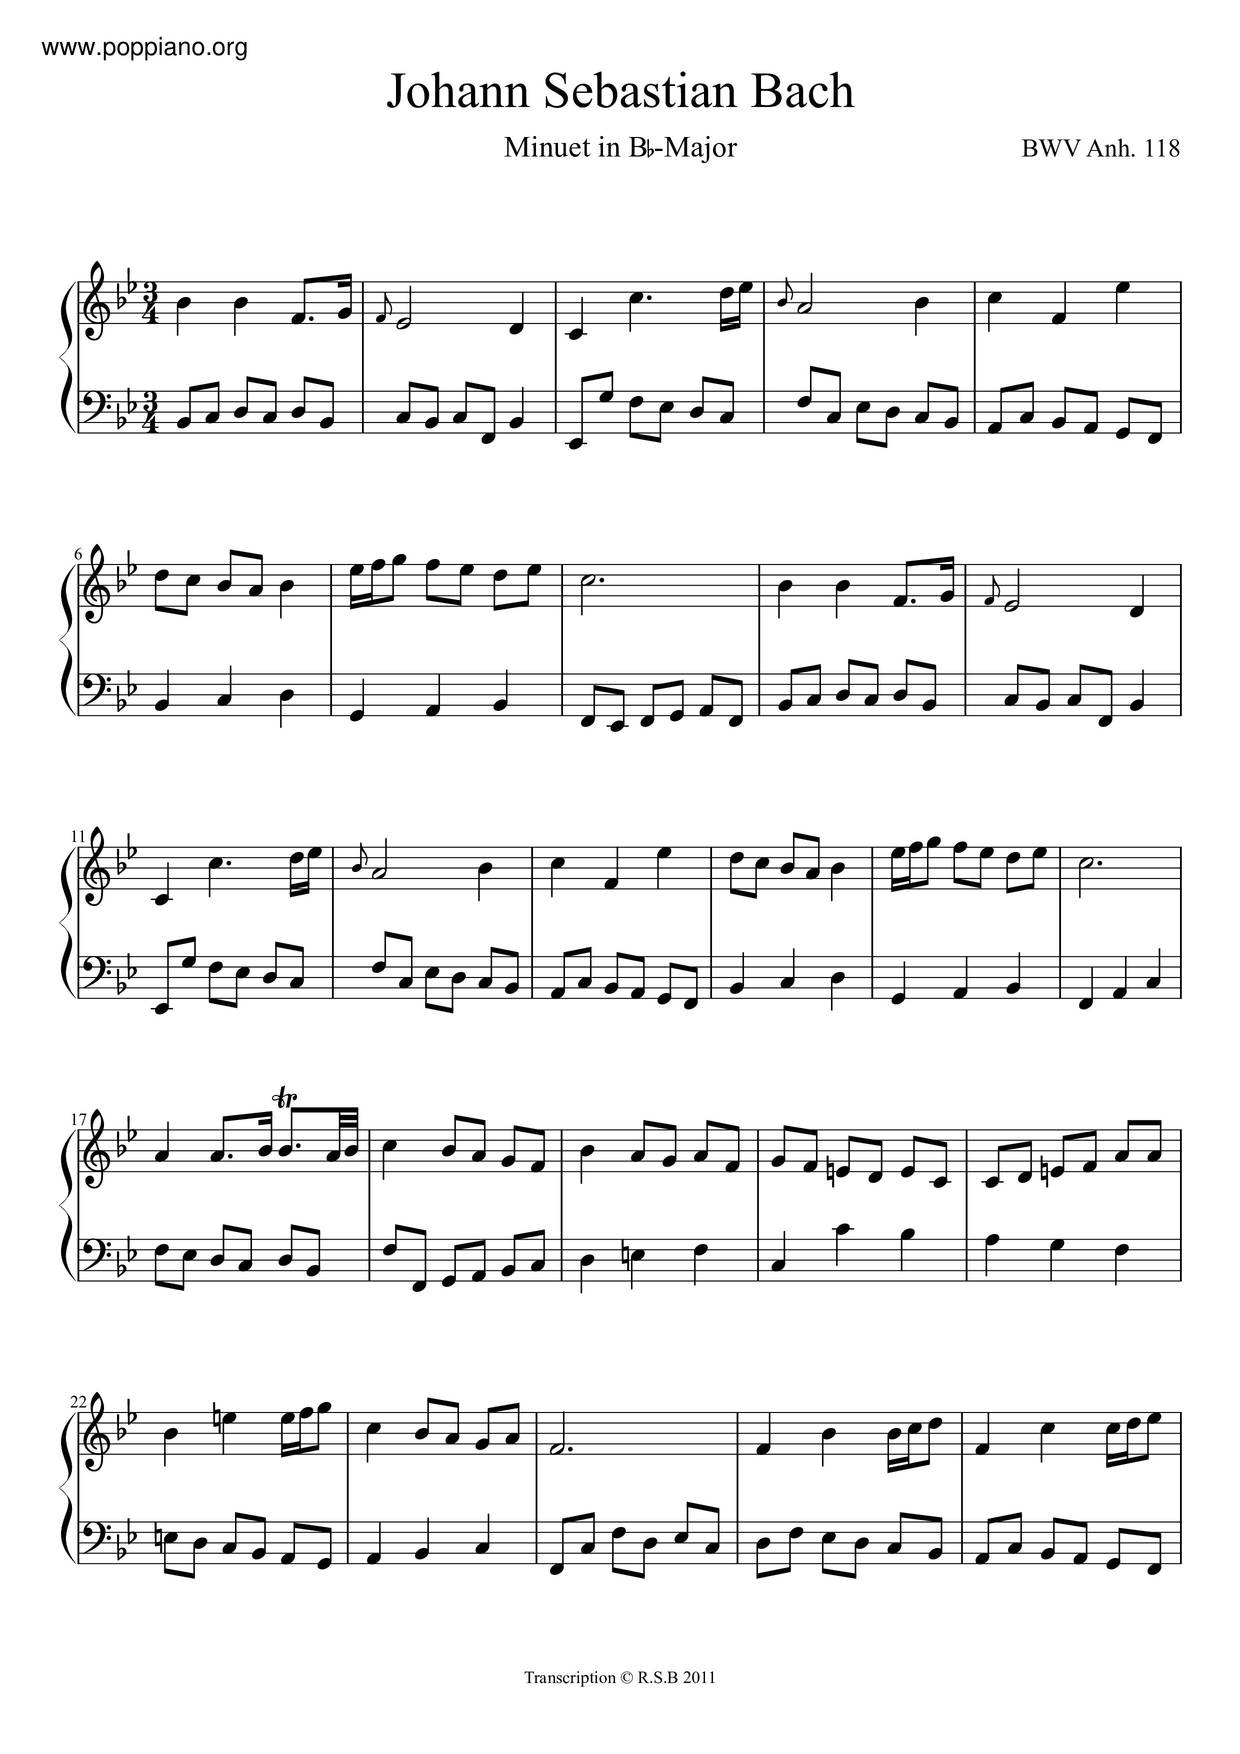 Minuet In B-Flat Major, BWV Anh. 118 Score